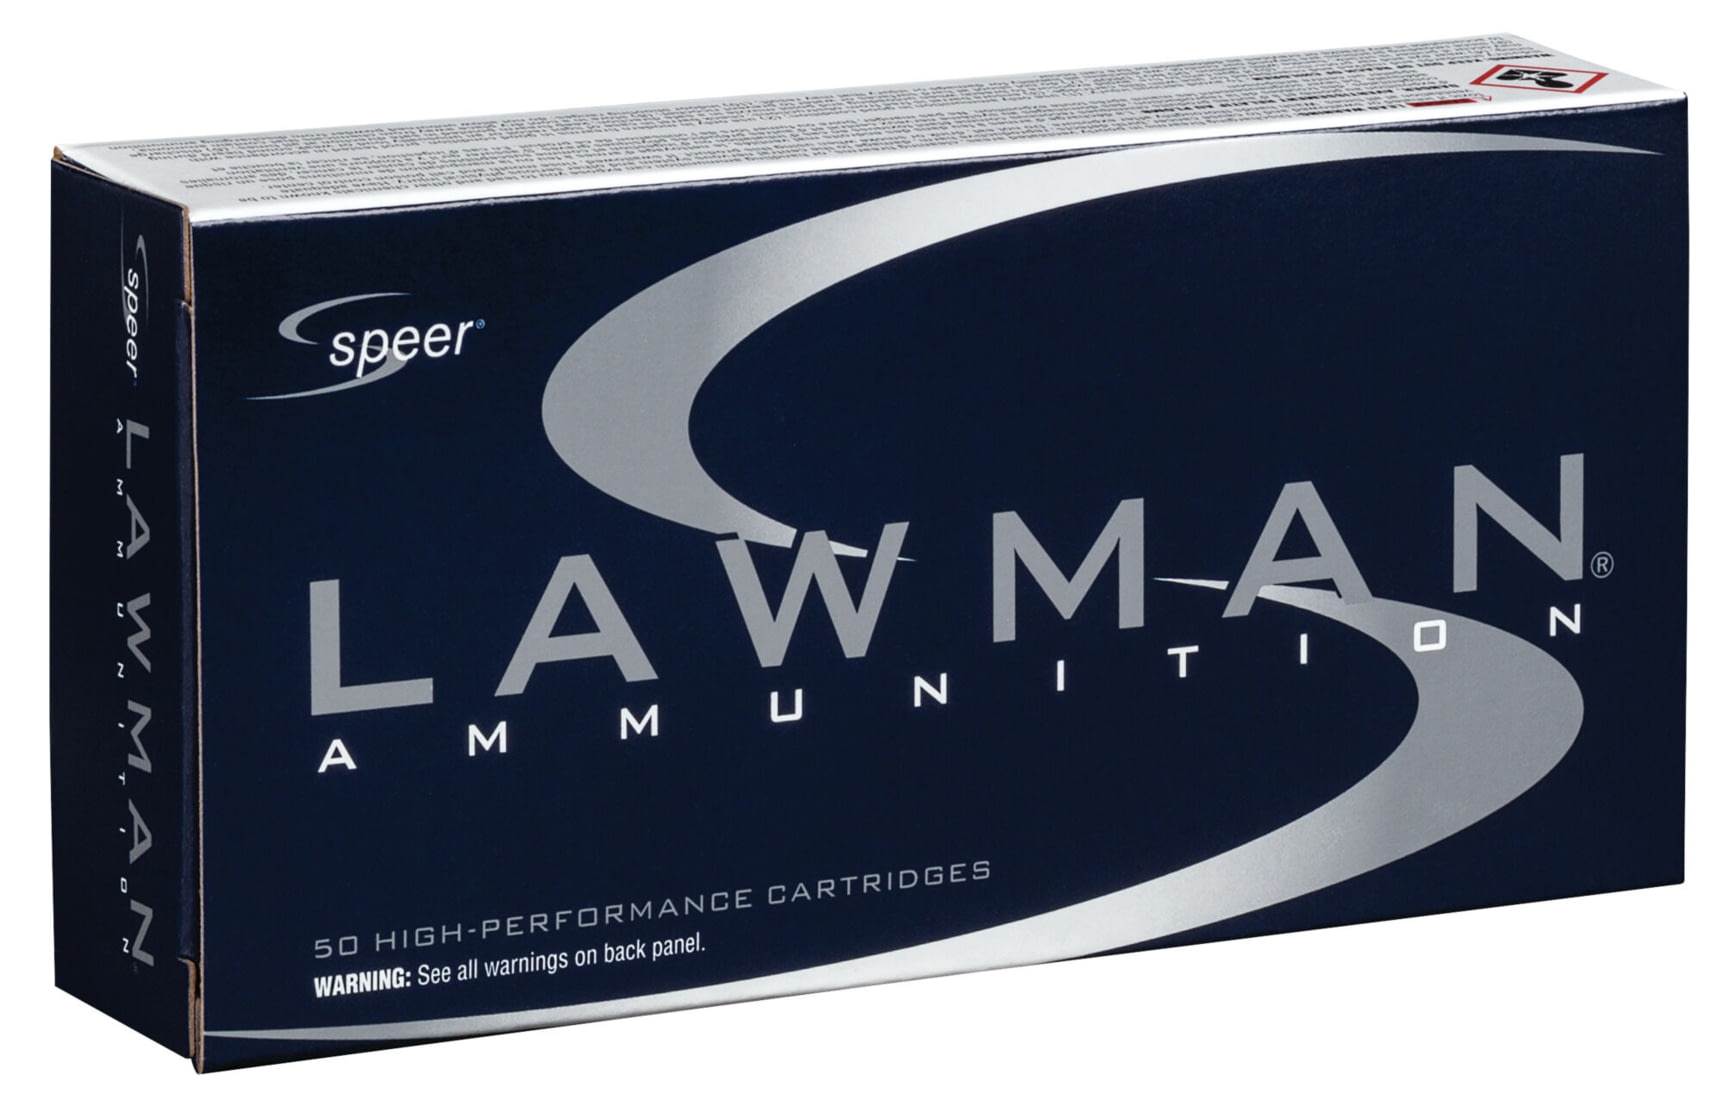 Speer Lawman Handgun CleanFire Training .38 Special +P 158 grain Total Metal Jacket Centerfire Pistol Ammunition